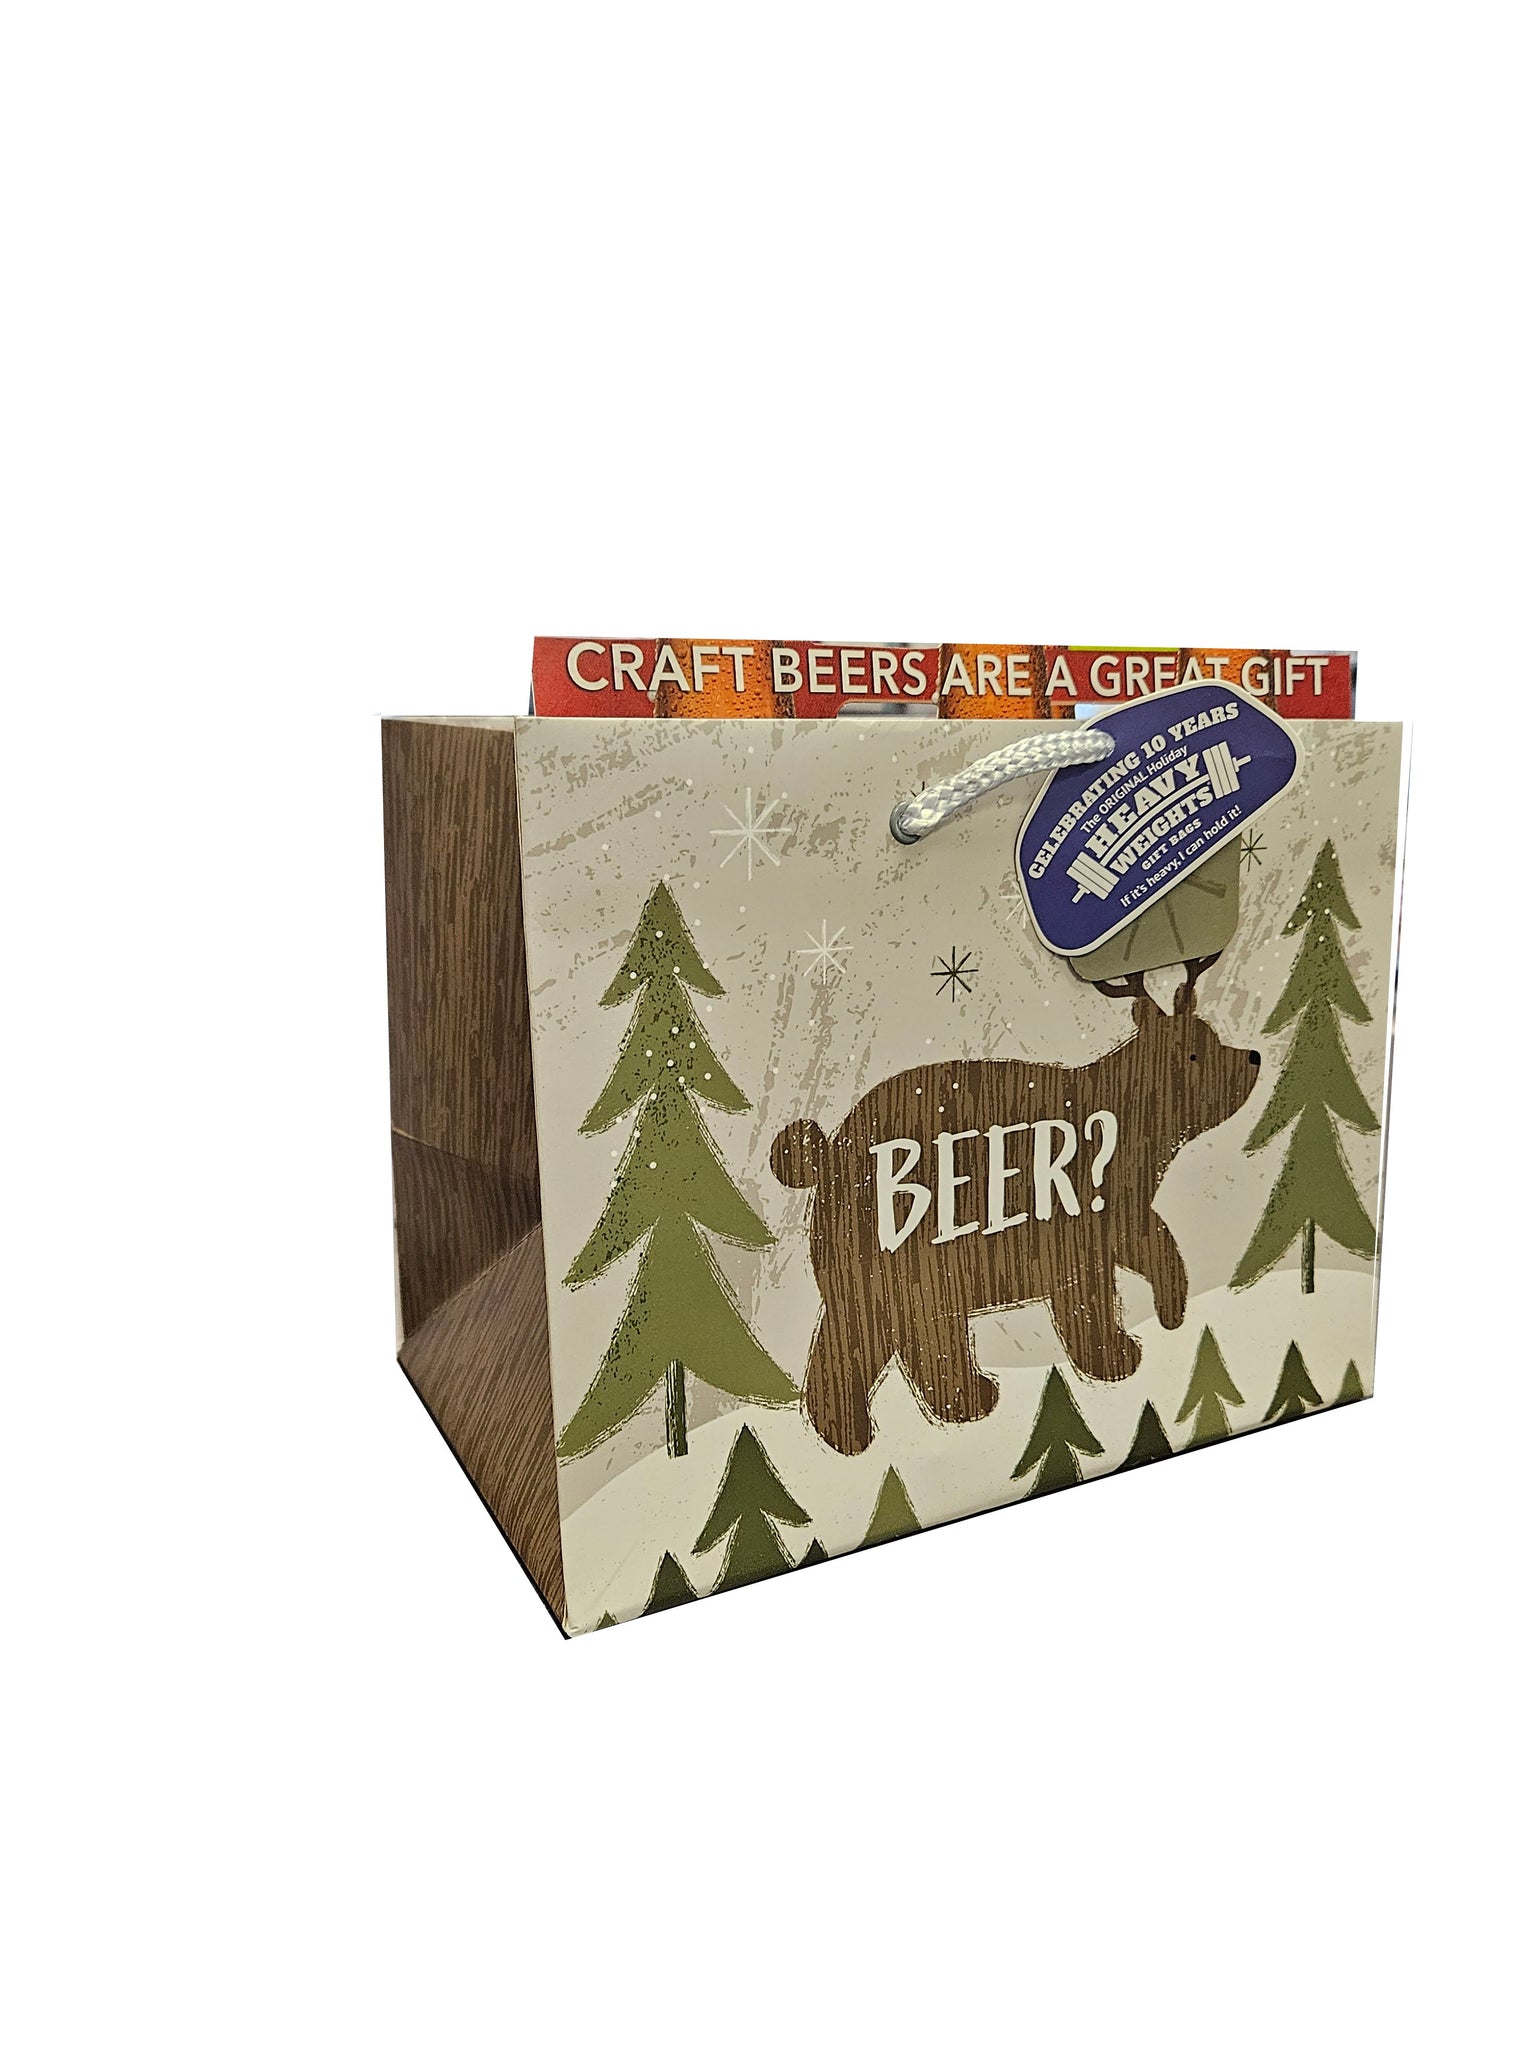 Holiday Craft Beer Gift Bag - BEER?